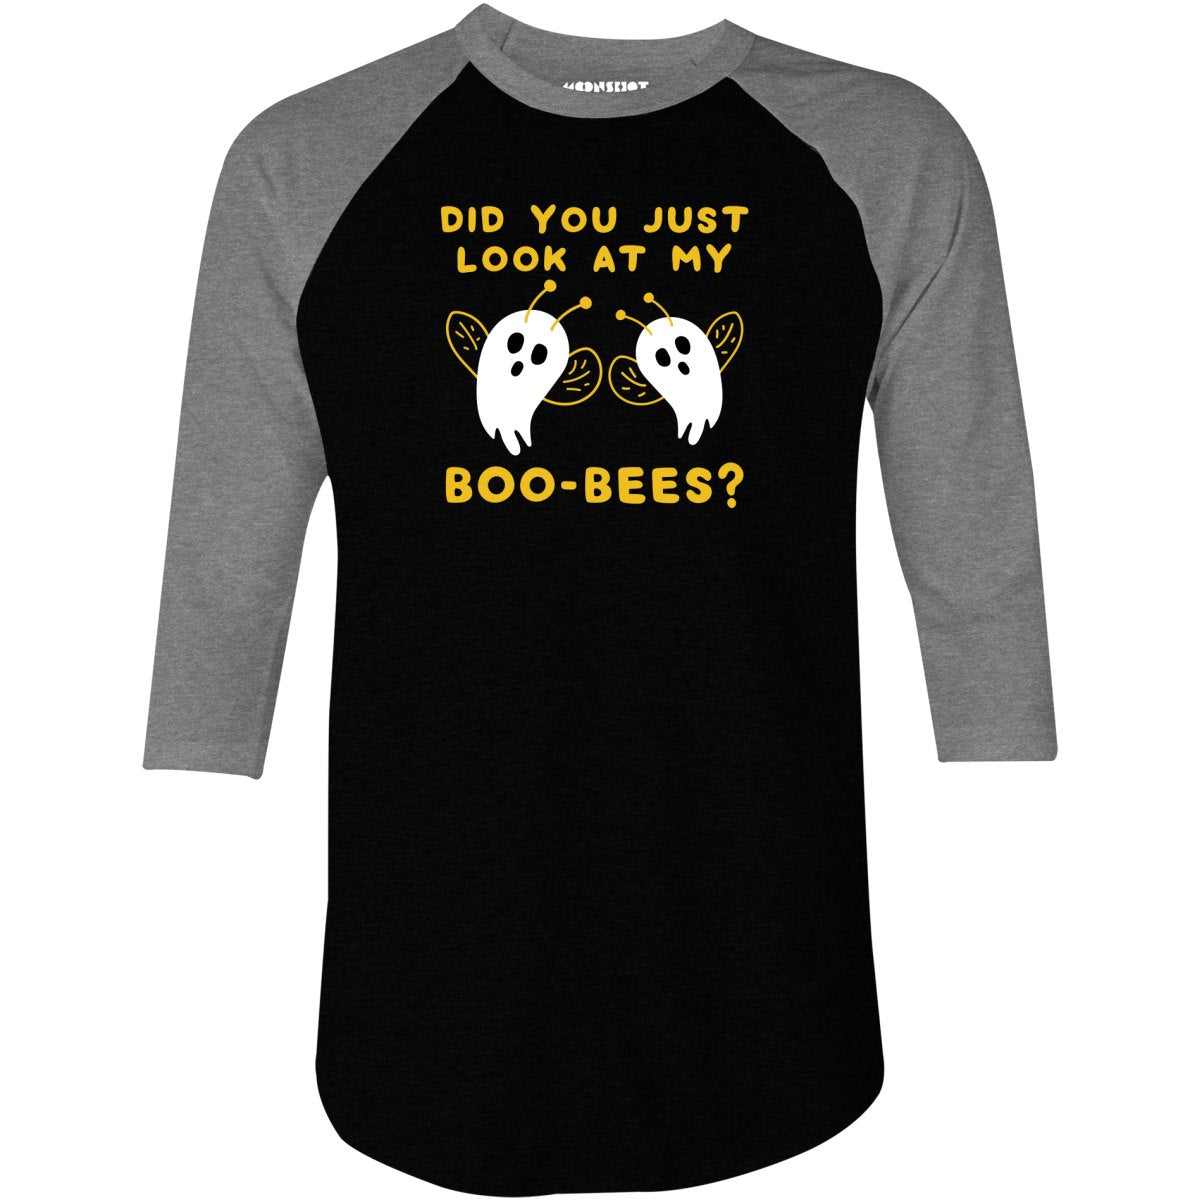 Did You Just Look At My Boo-Bees? - 3/4 Sleeve Raglan T-Shirt